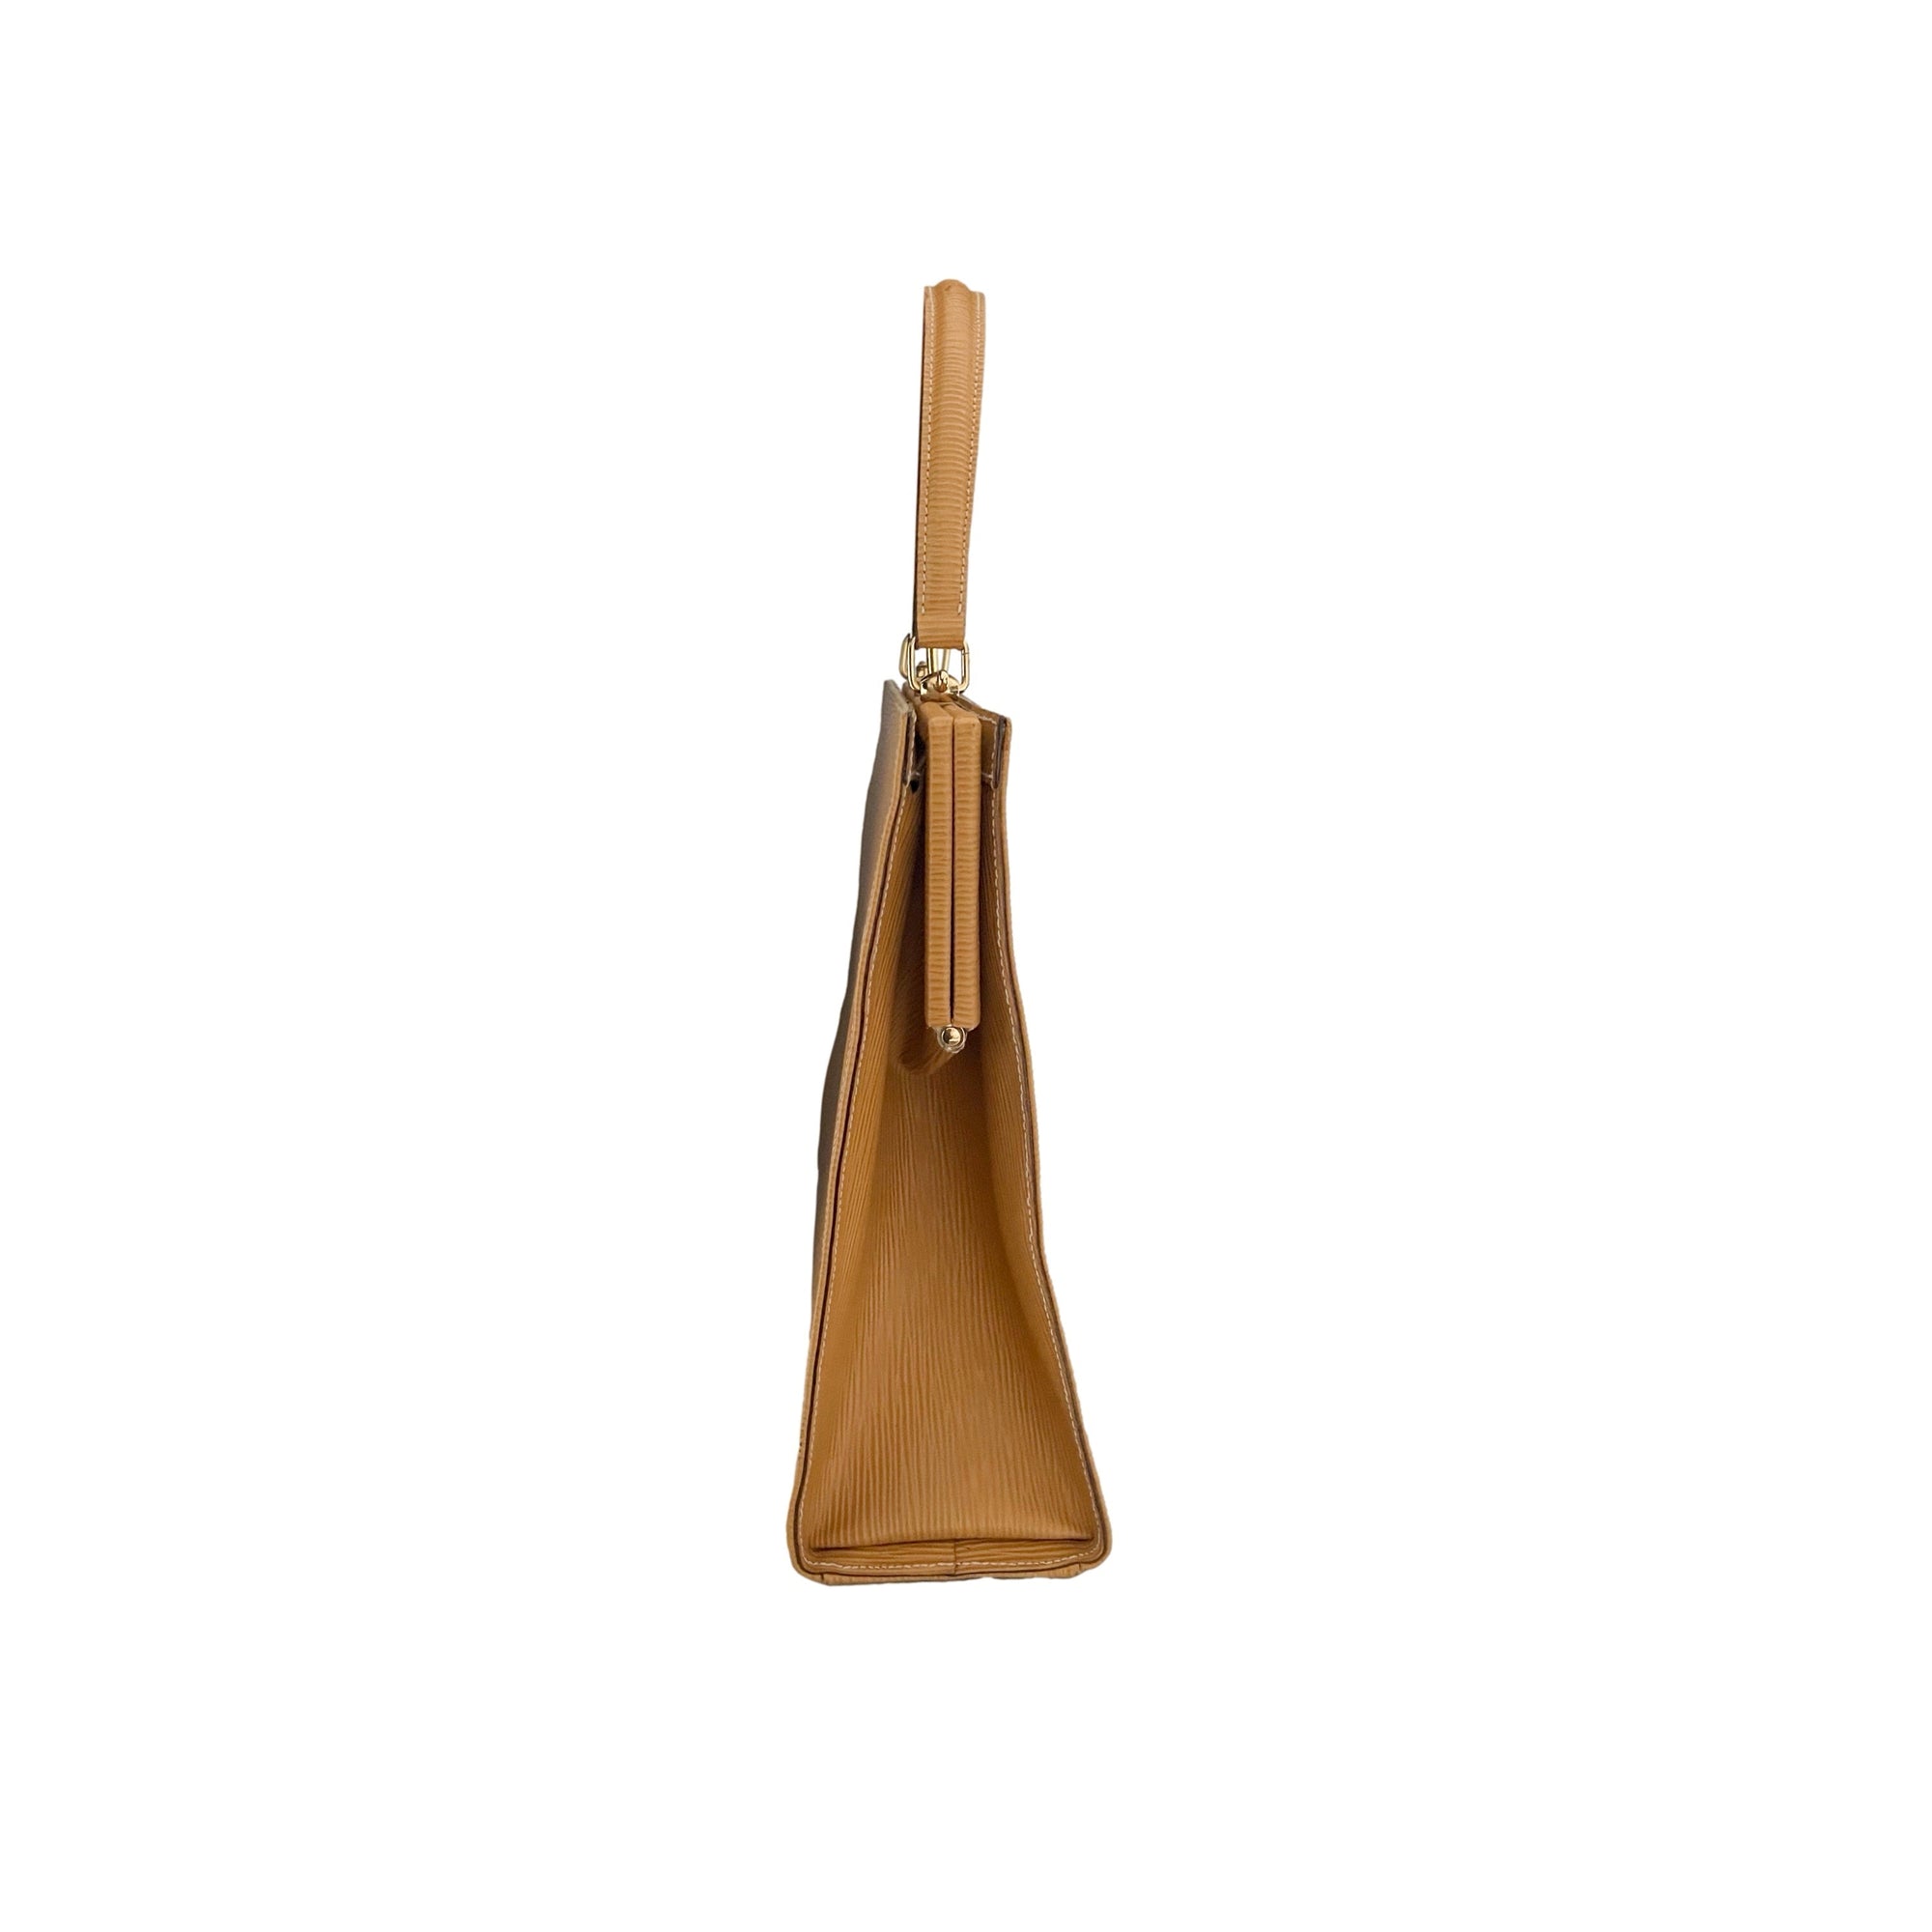 Fendi Mustard Epi Leather Top Handle Bag - Handbags